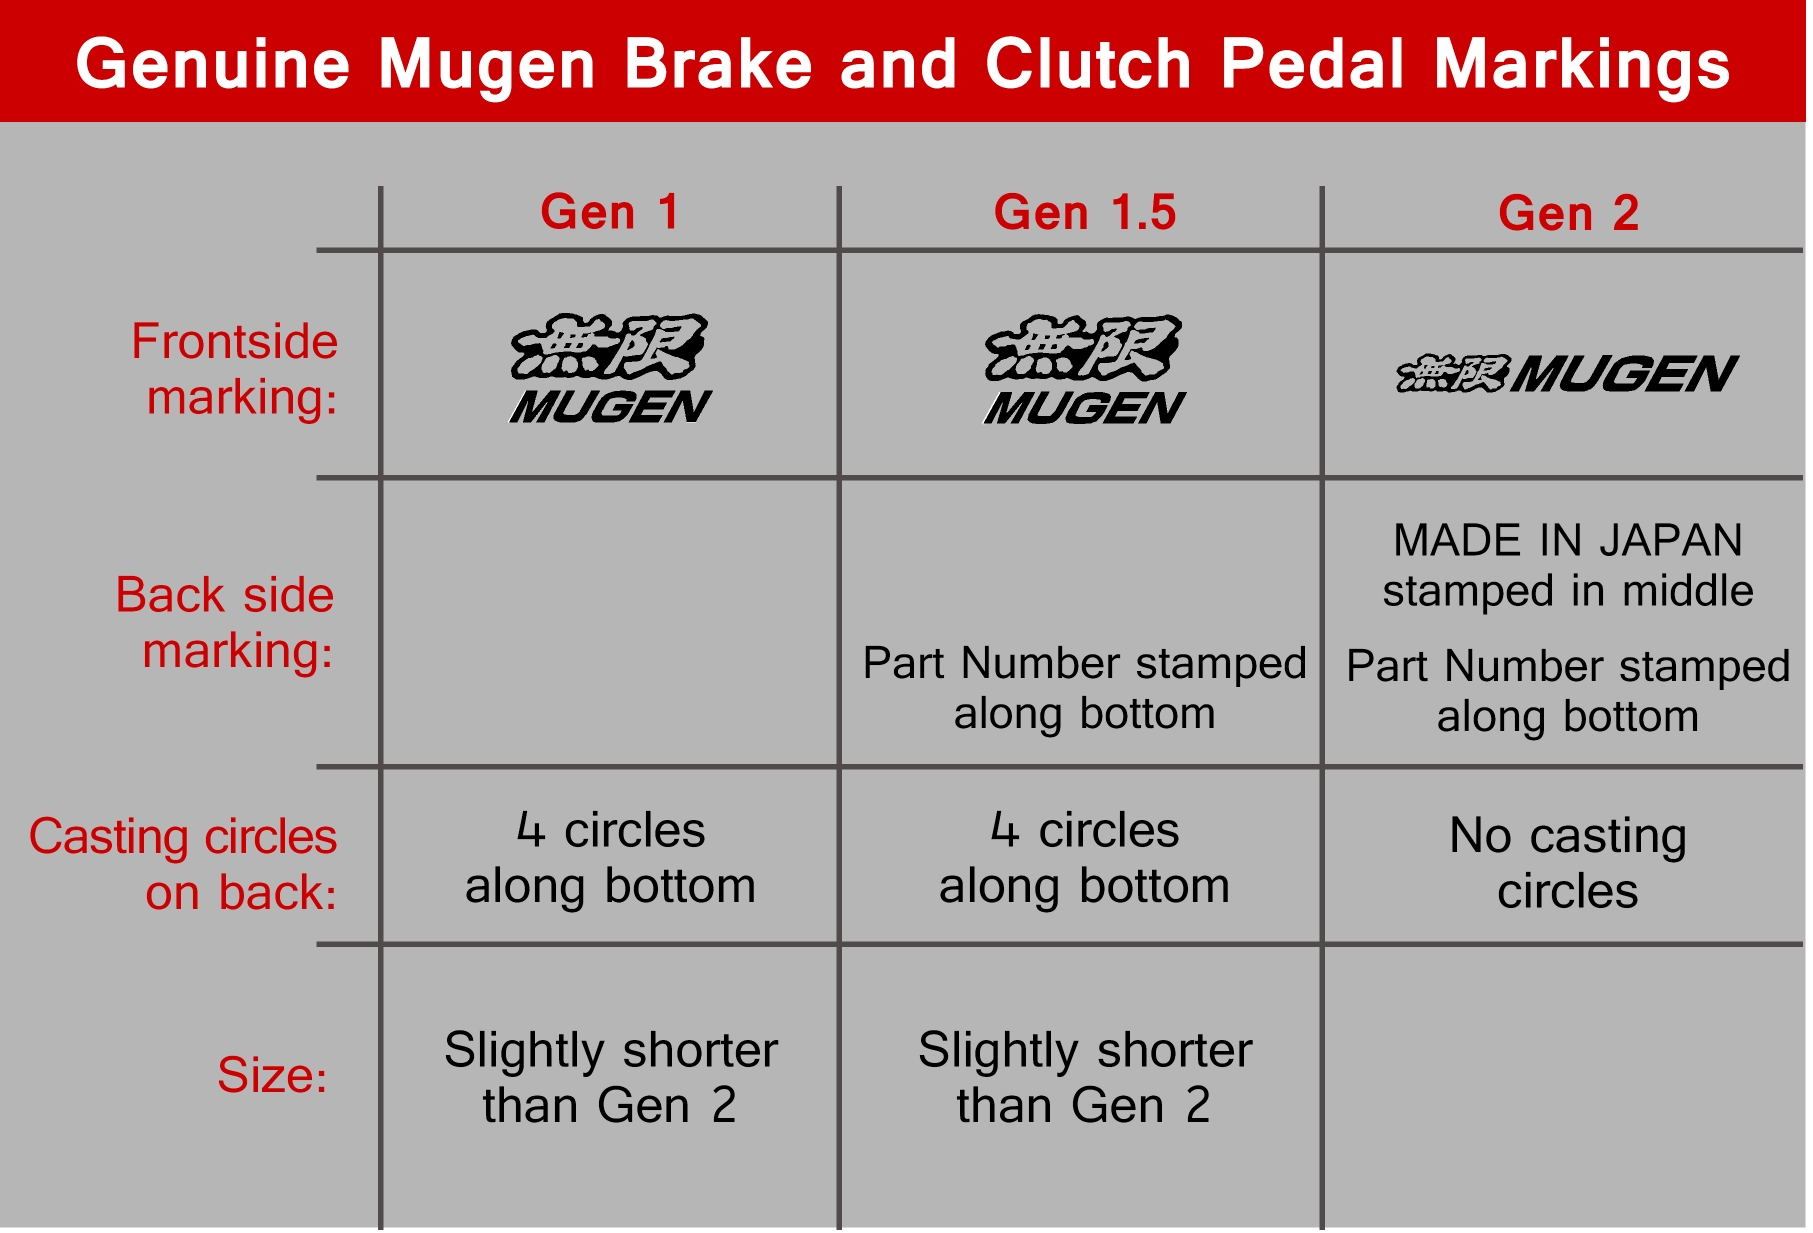 Genuine Mugen Sport Pedal Generation Comparison